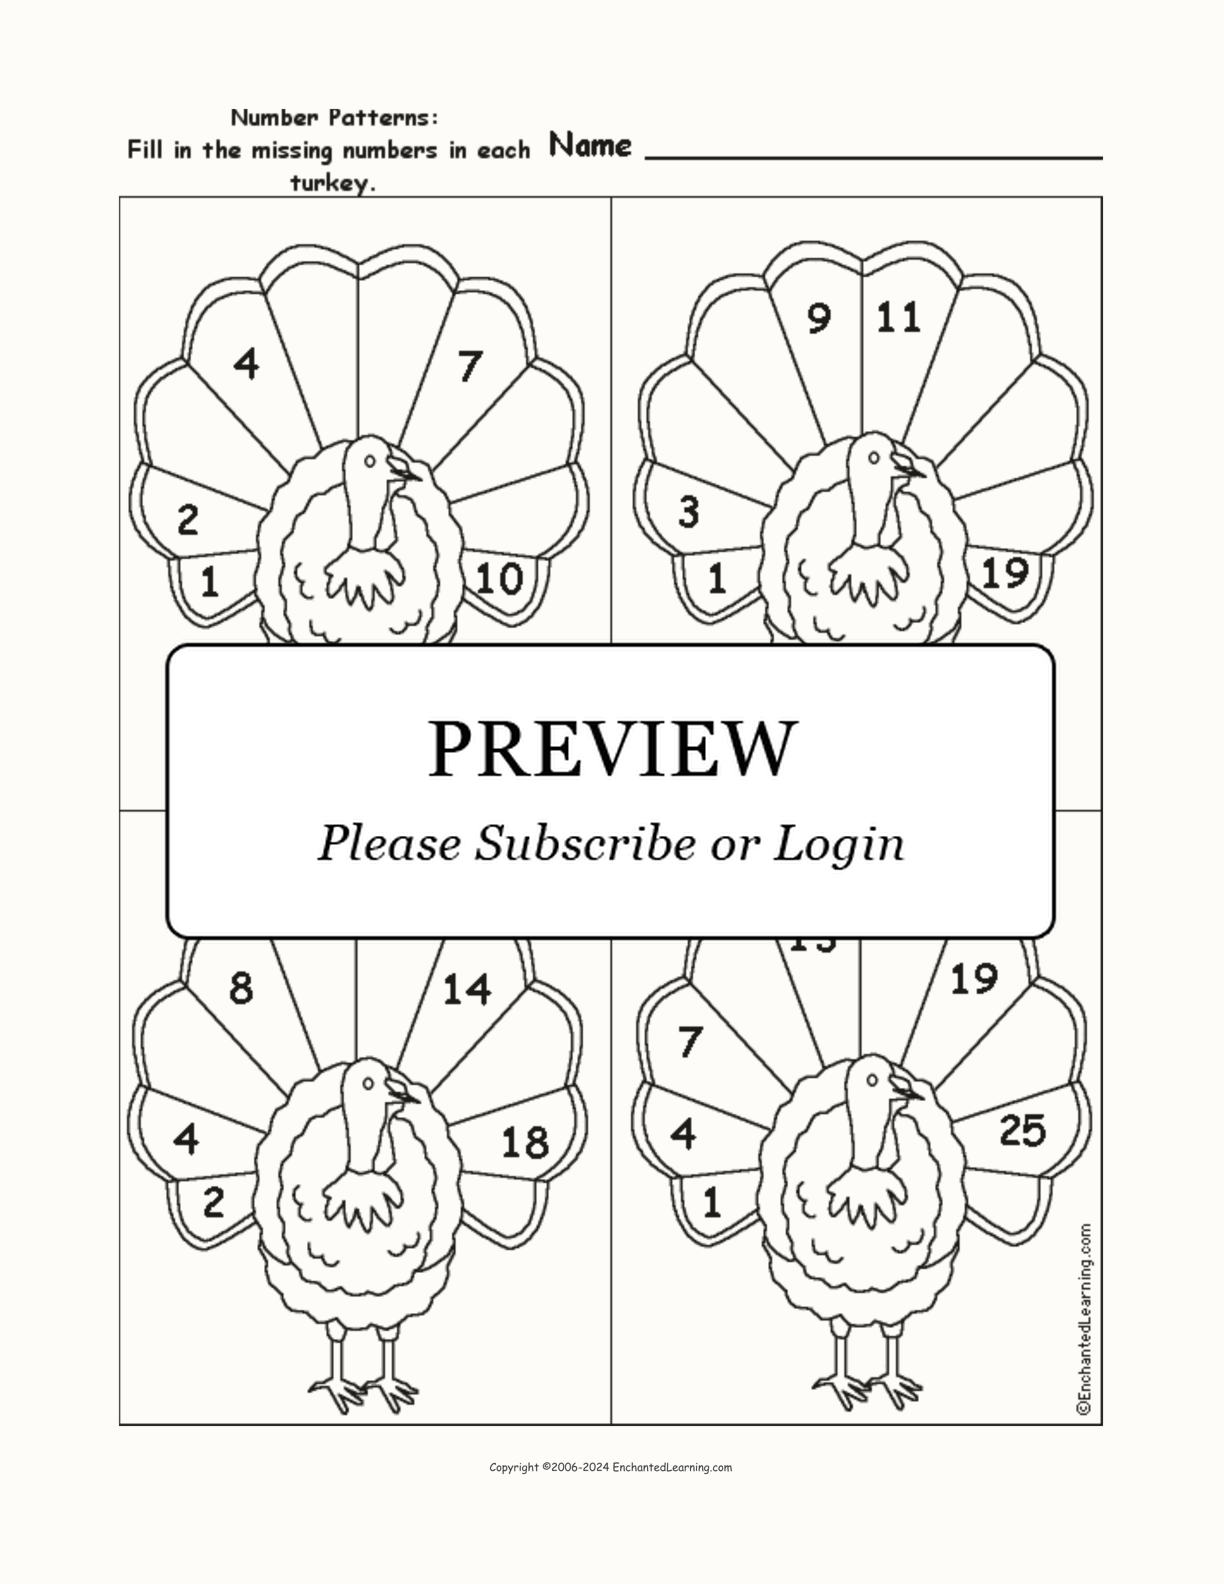 Turkey Number Patterns #1 interactive worksheet page 1